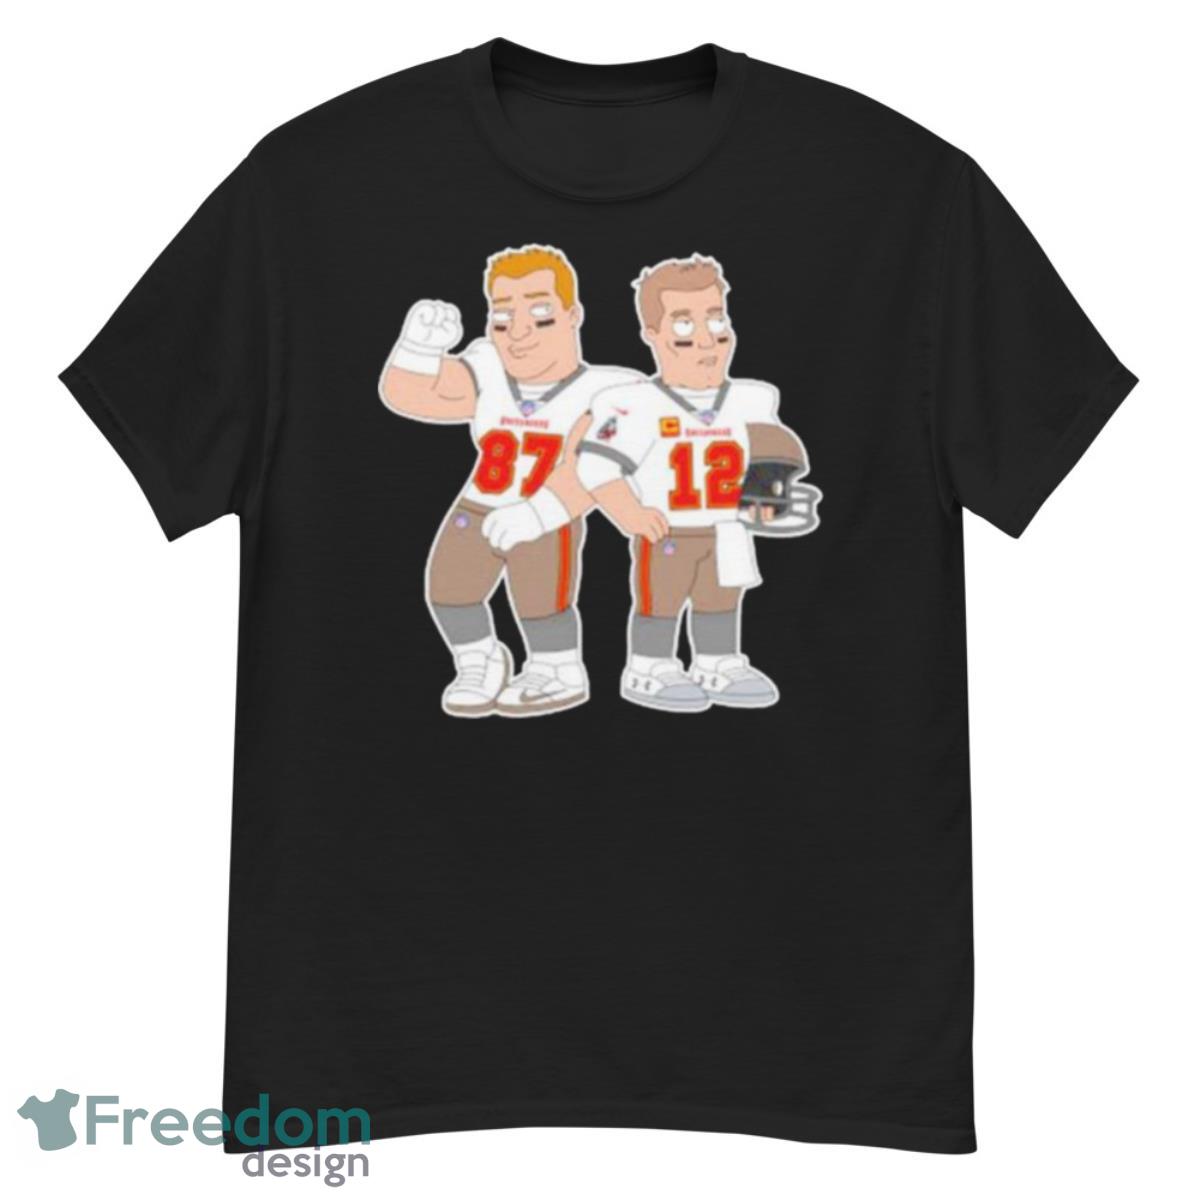 Rob Gronkowski and Tom Brady Tampa Bay Buccaneers cartoon shirt - G500 Men’s Classic T-Shirt